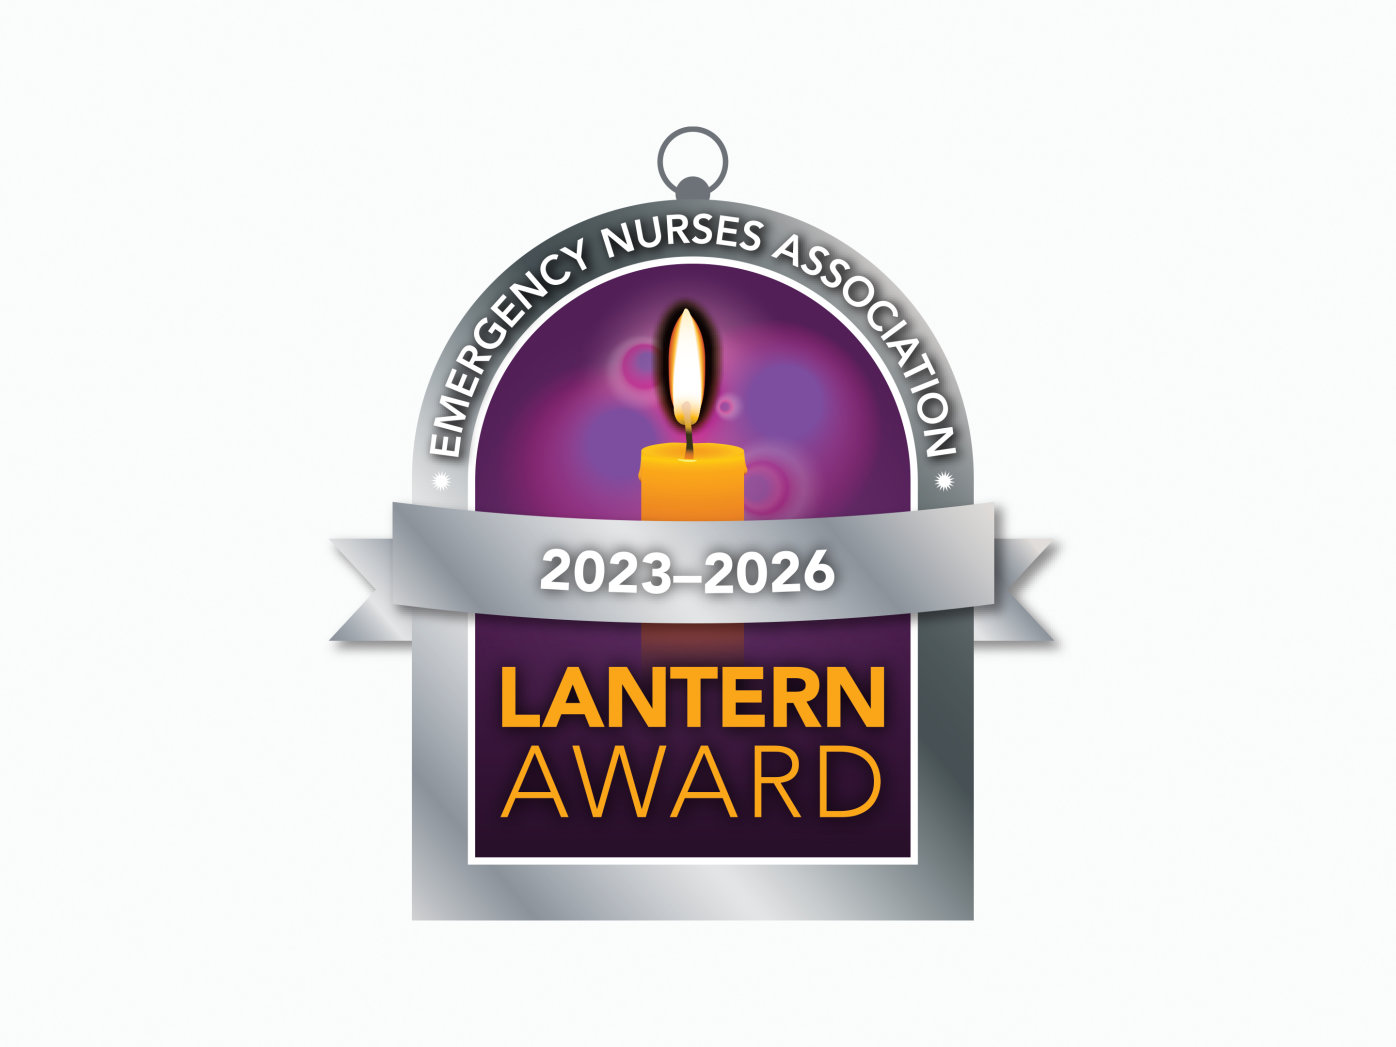 Emergency Nurses Association Lantern Award 2023-2026 